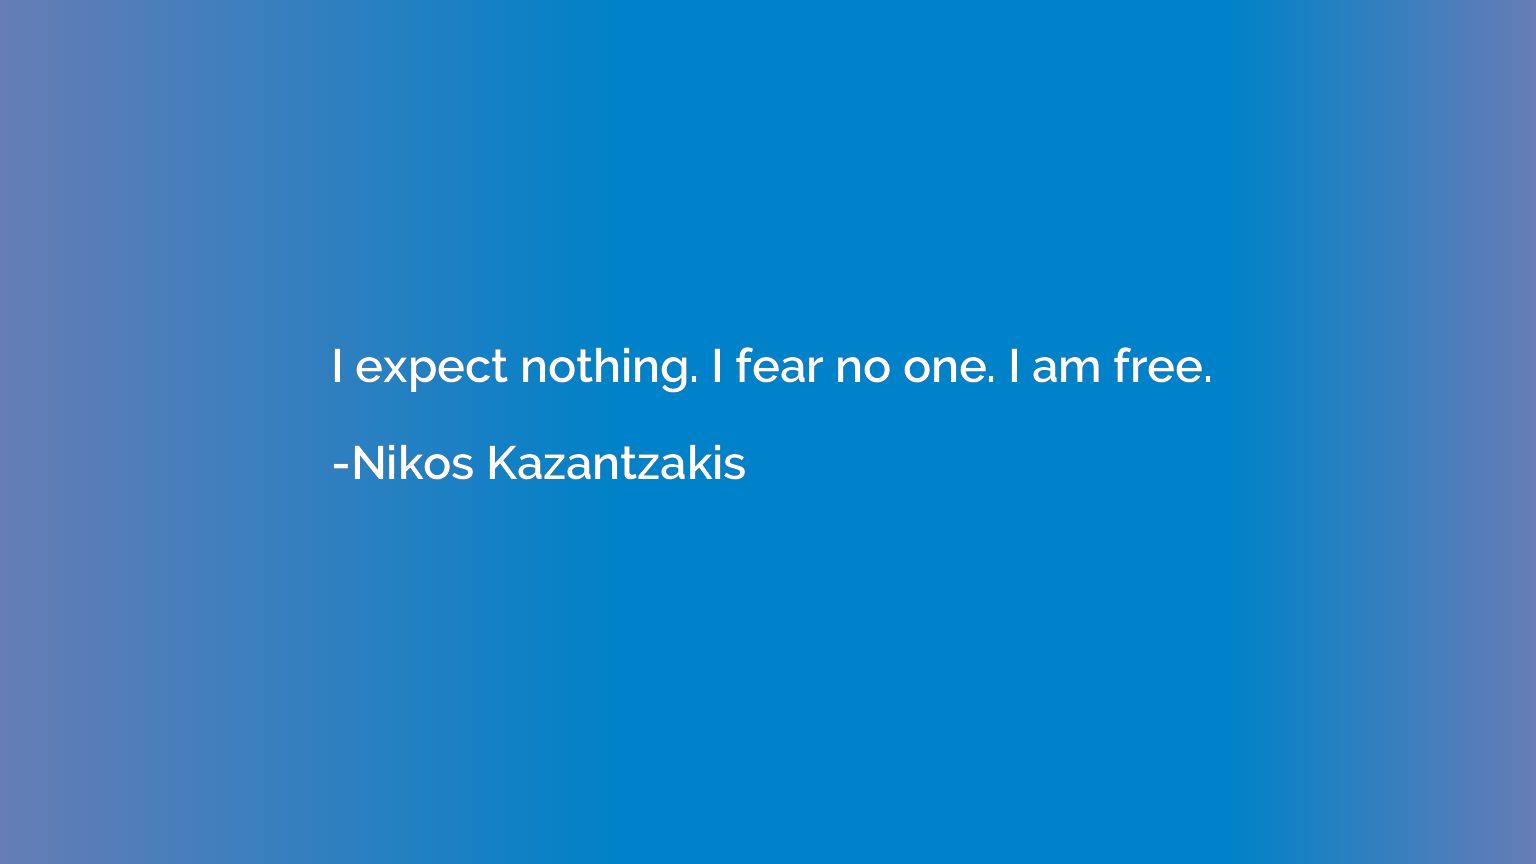 I expect nothing. I fear no one. I am free.